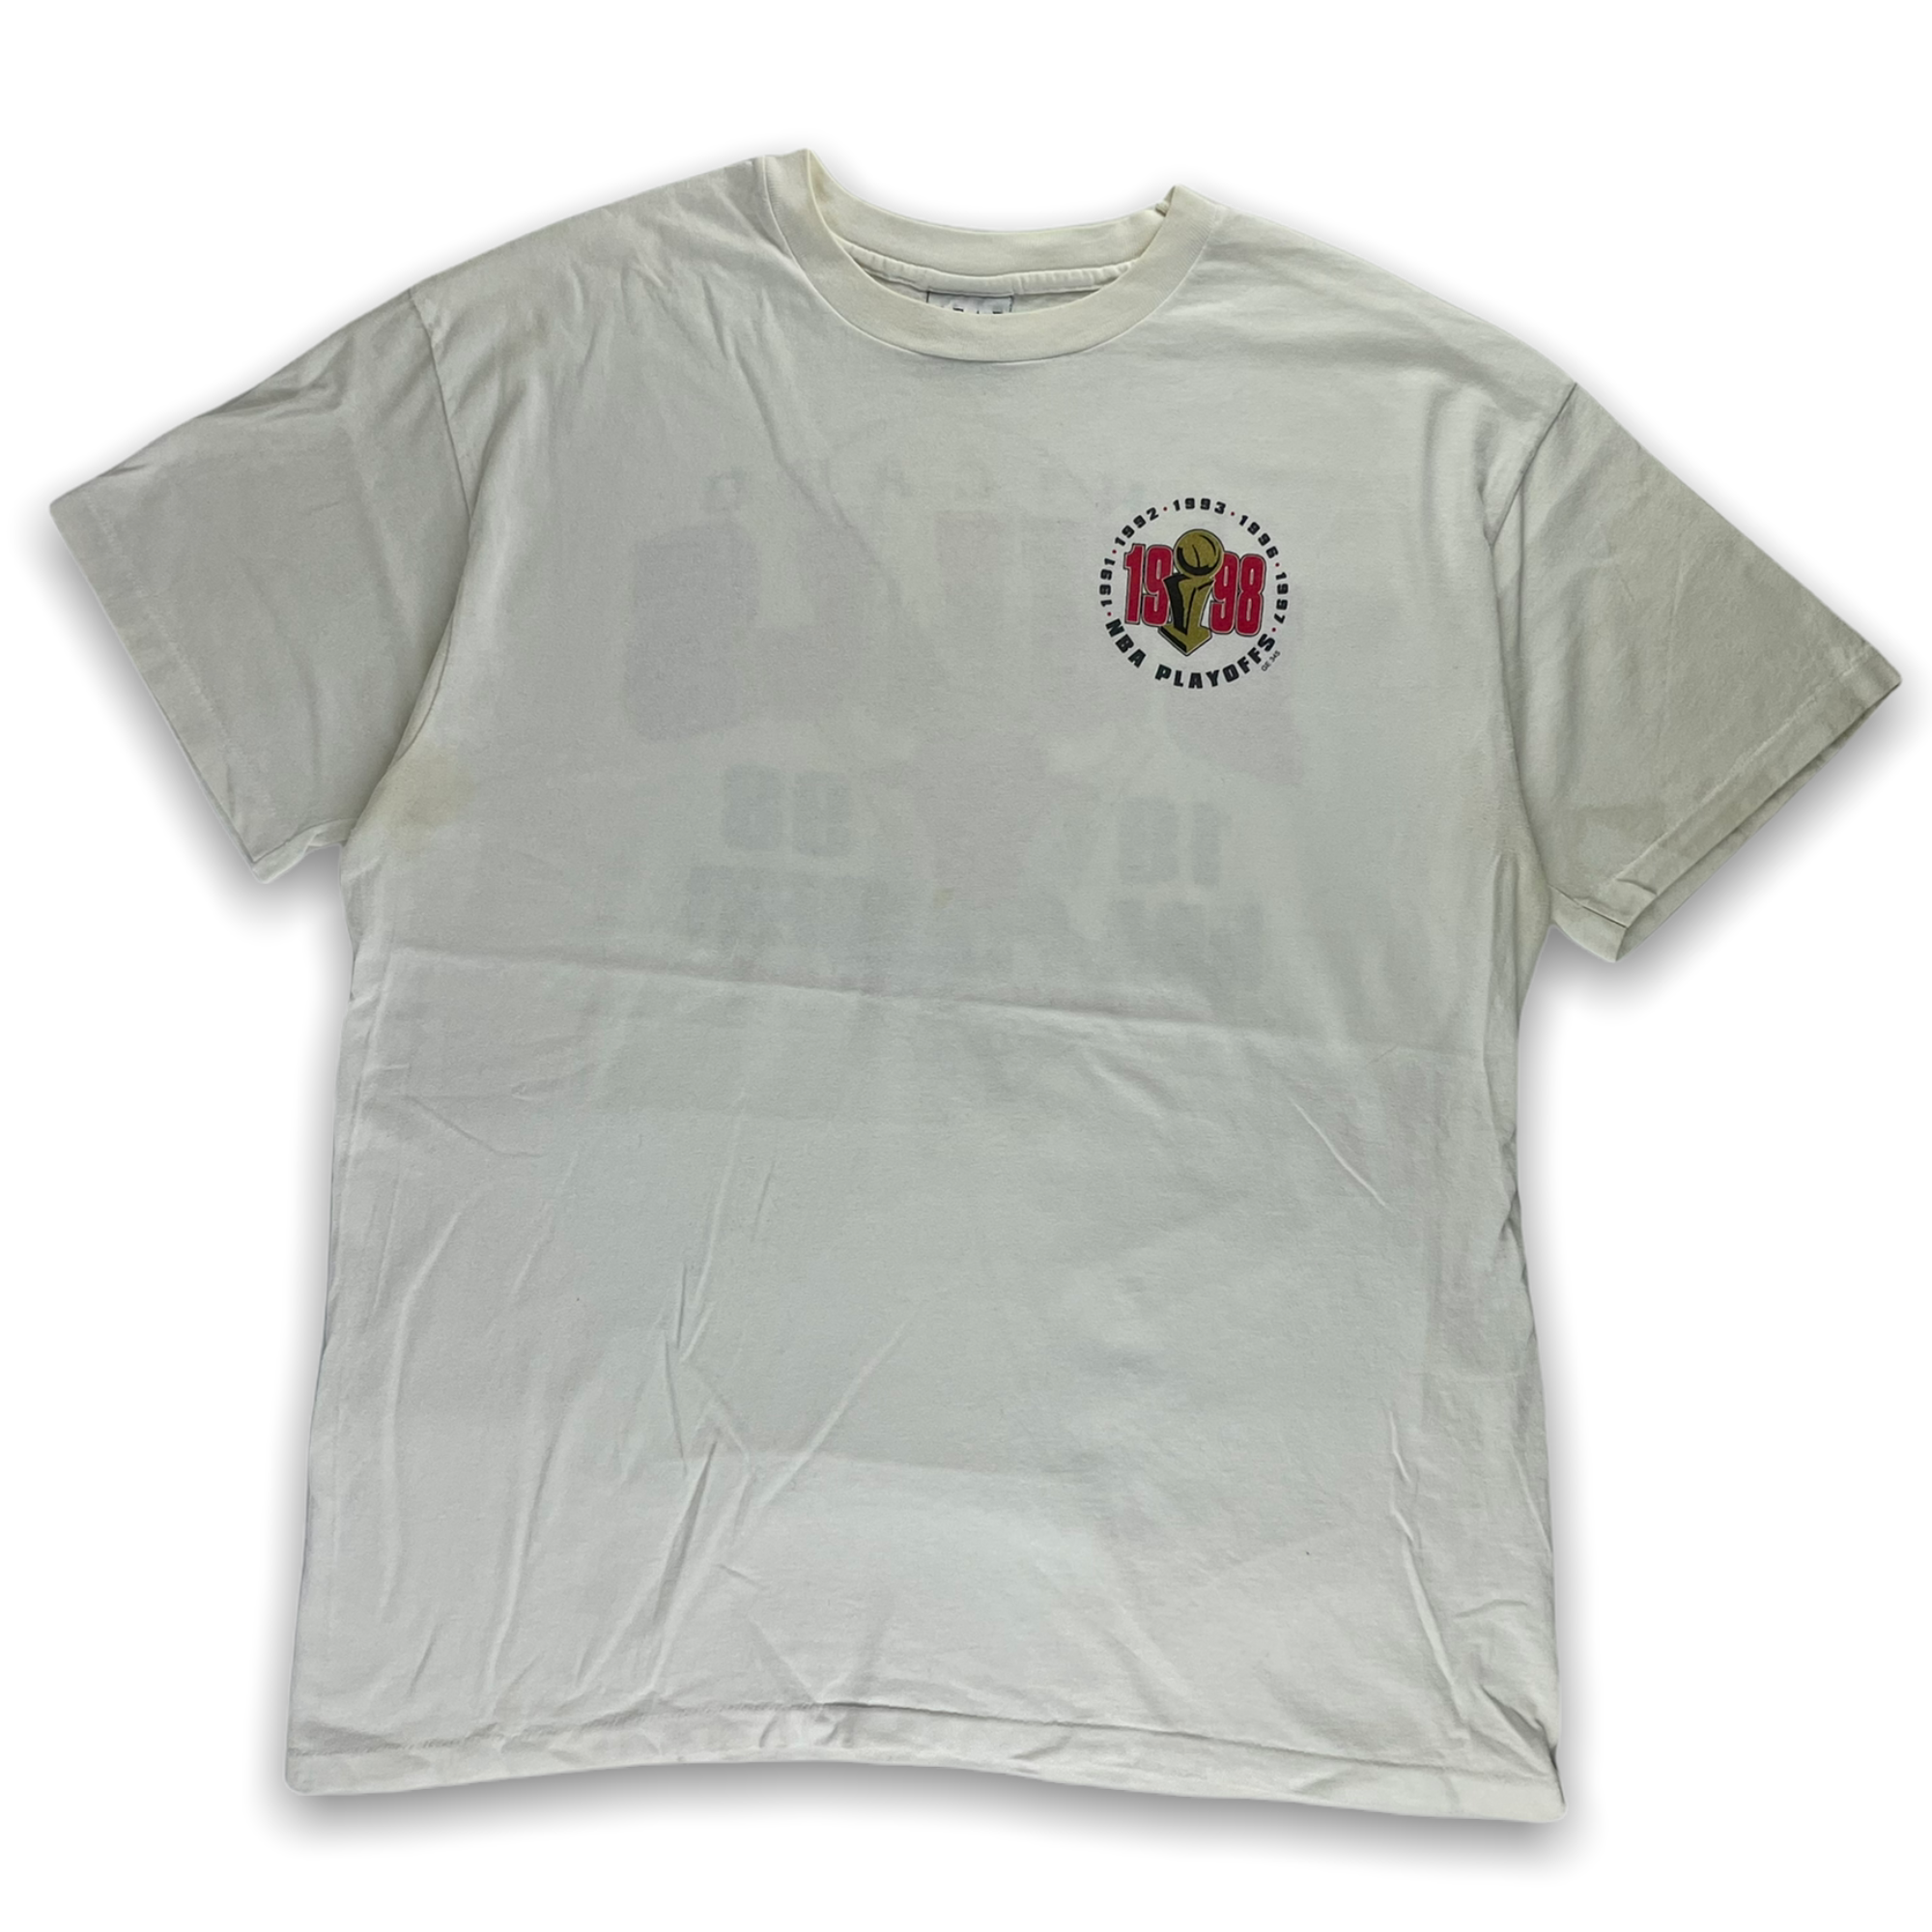 Vintage 1998 Chicago Bulls T-shirt - Restorecph